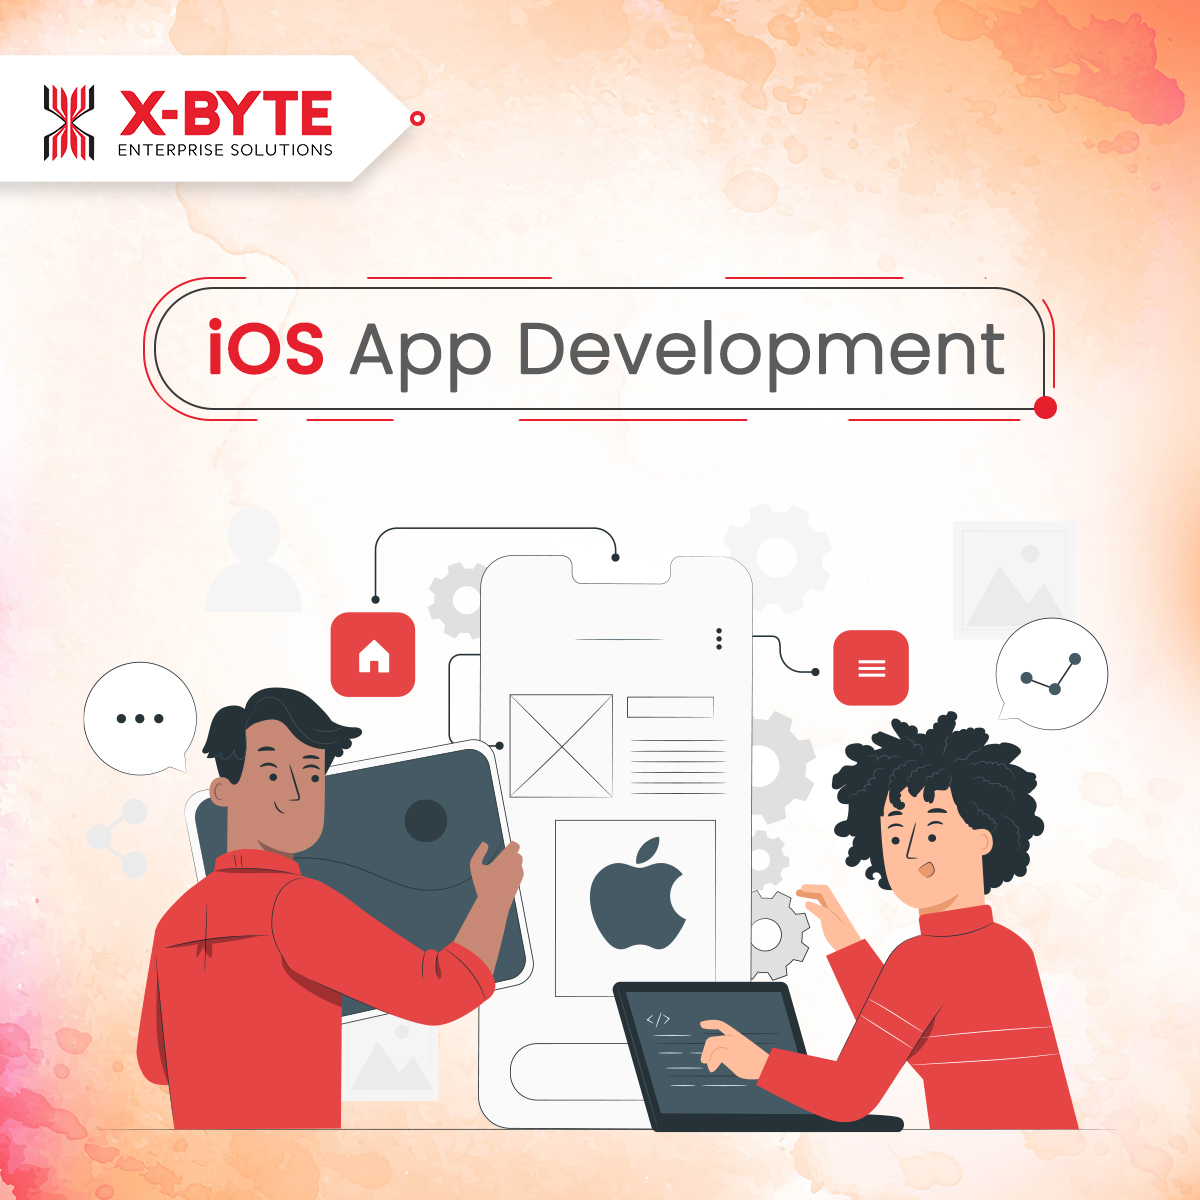 ENTERPRISE SOLUTIONS

(ios App Development |

 

 

 

 

of
’ oF
« 1

0